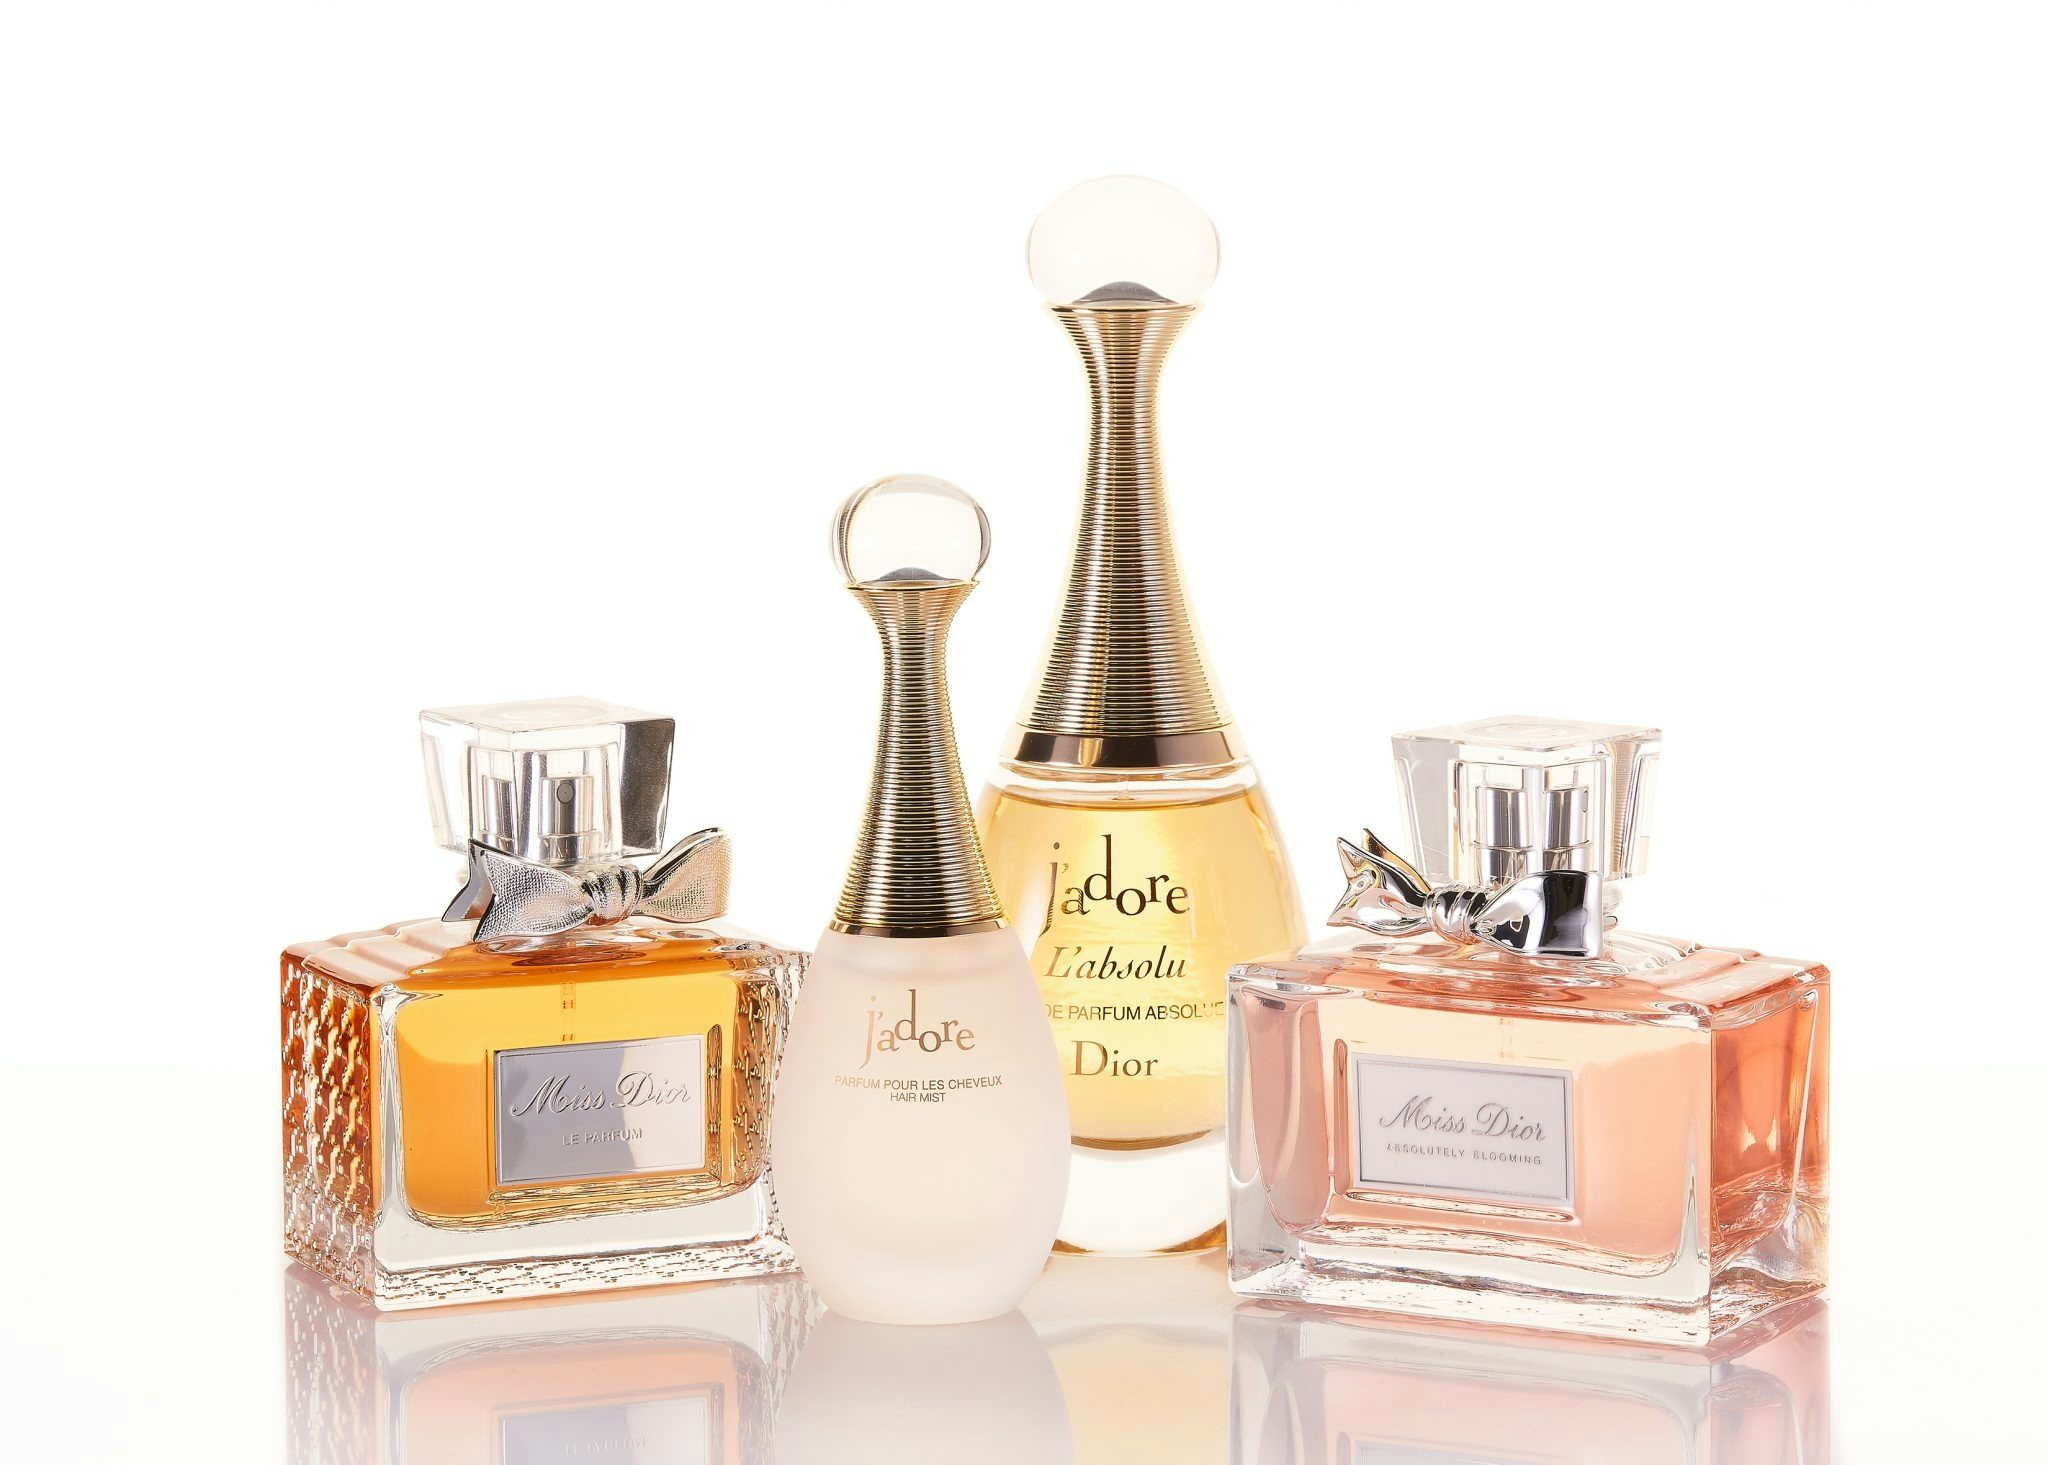 Dior fragrance. Photo: Shutterstock